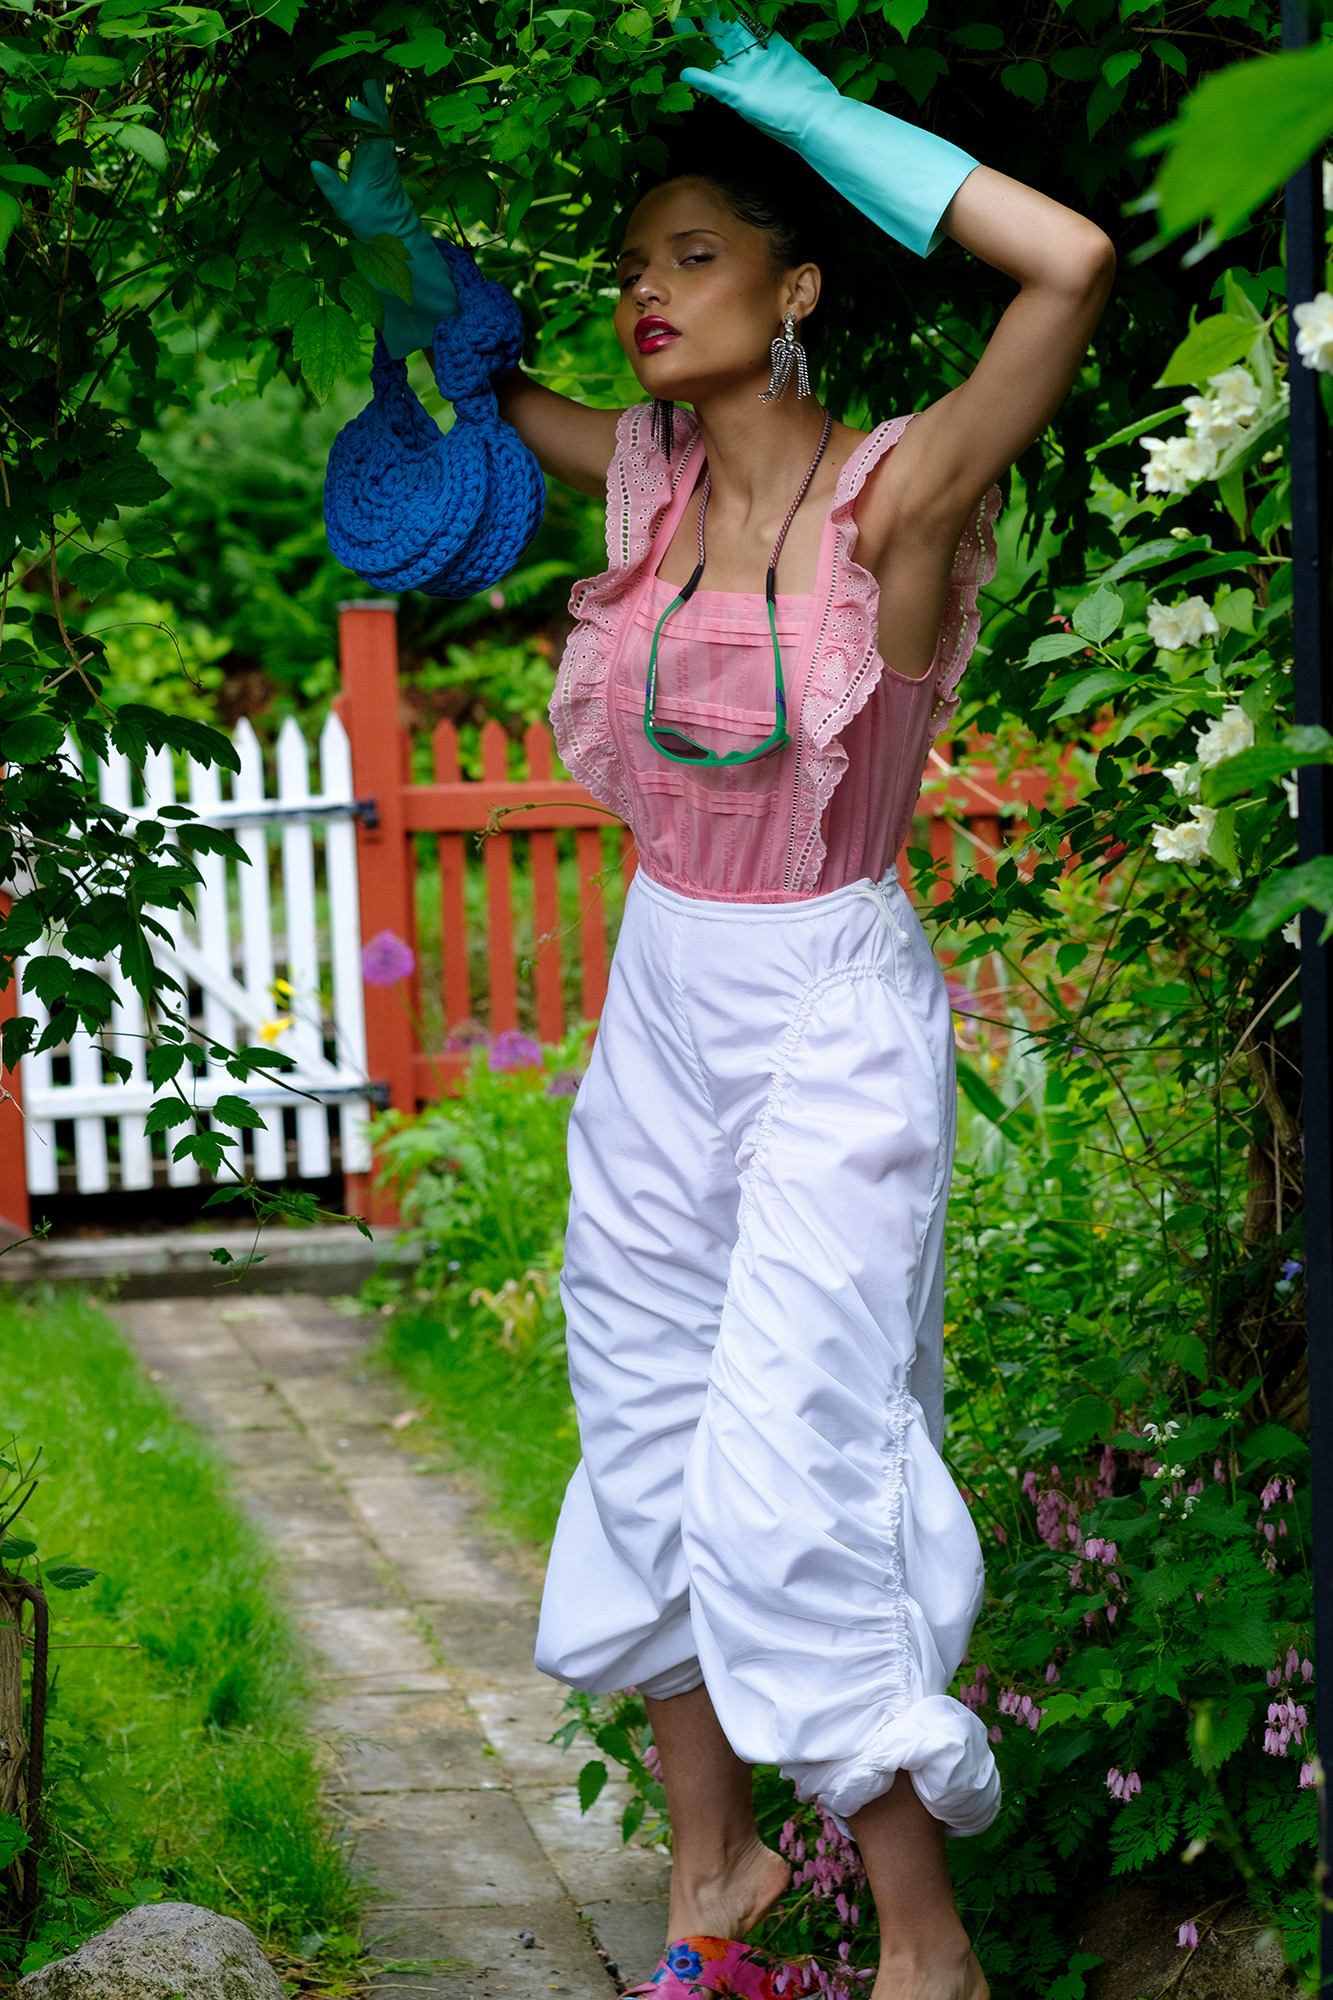 Krull magazine, Gardening Party fashion story. Model in lush green garden.